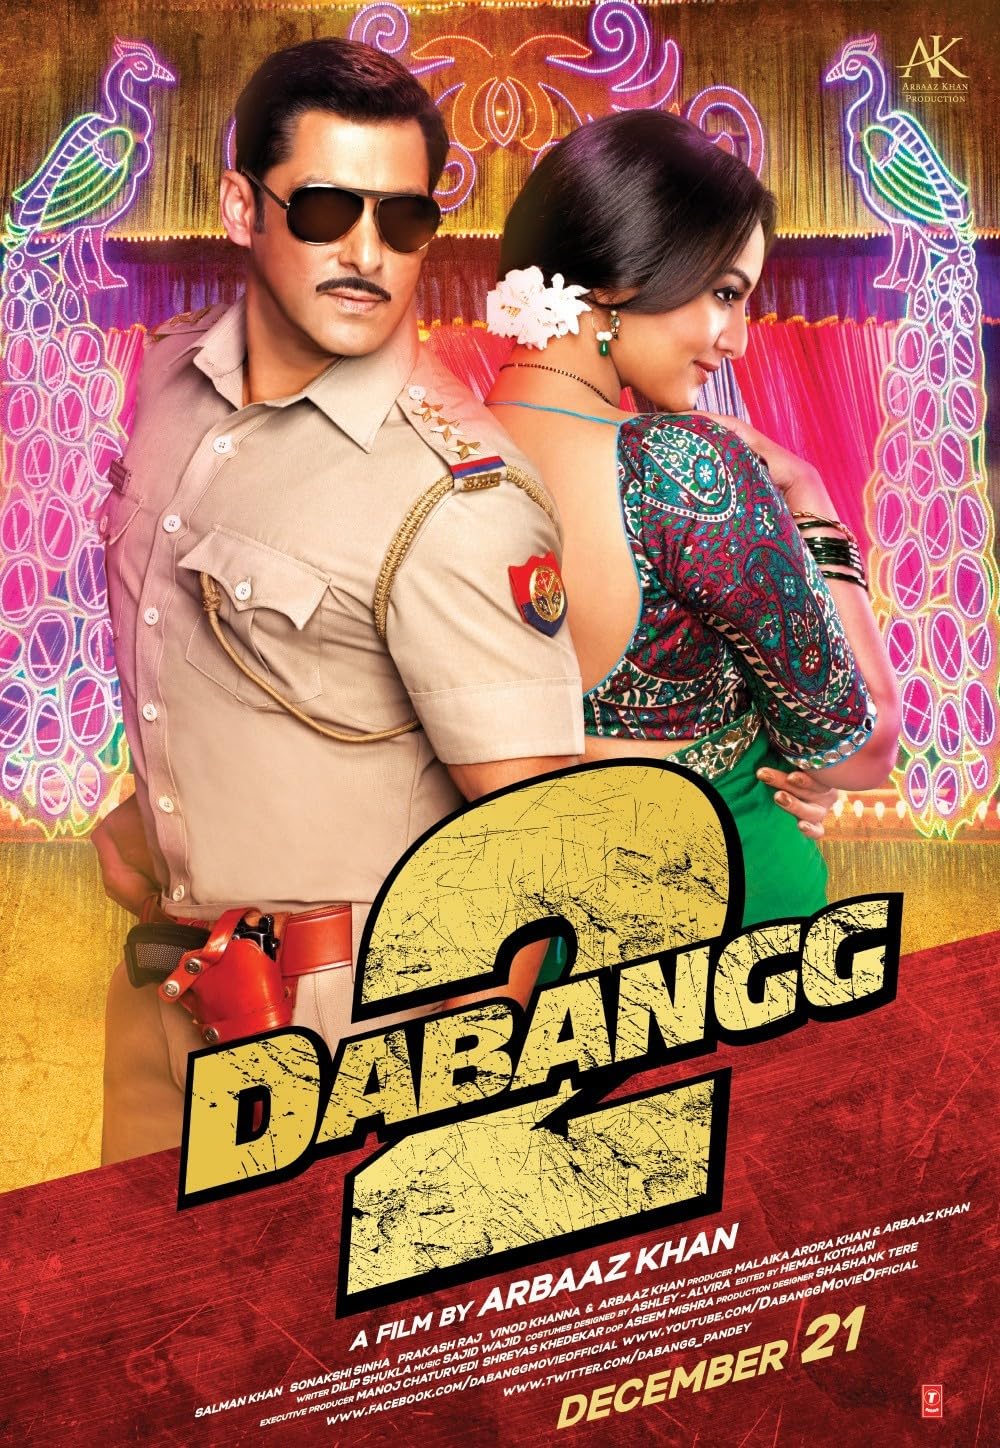 assets/img/movie/Dabangg 2 2012 Hindi Full Movie Watch Online HD Print Free Download.jpg